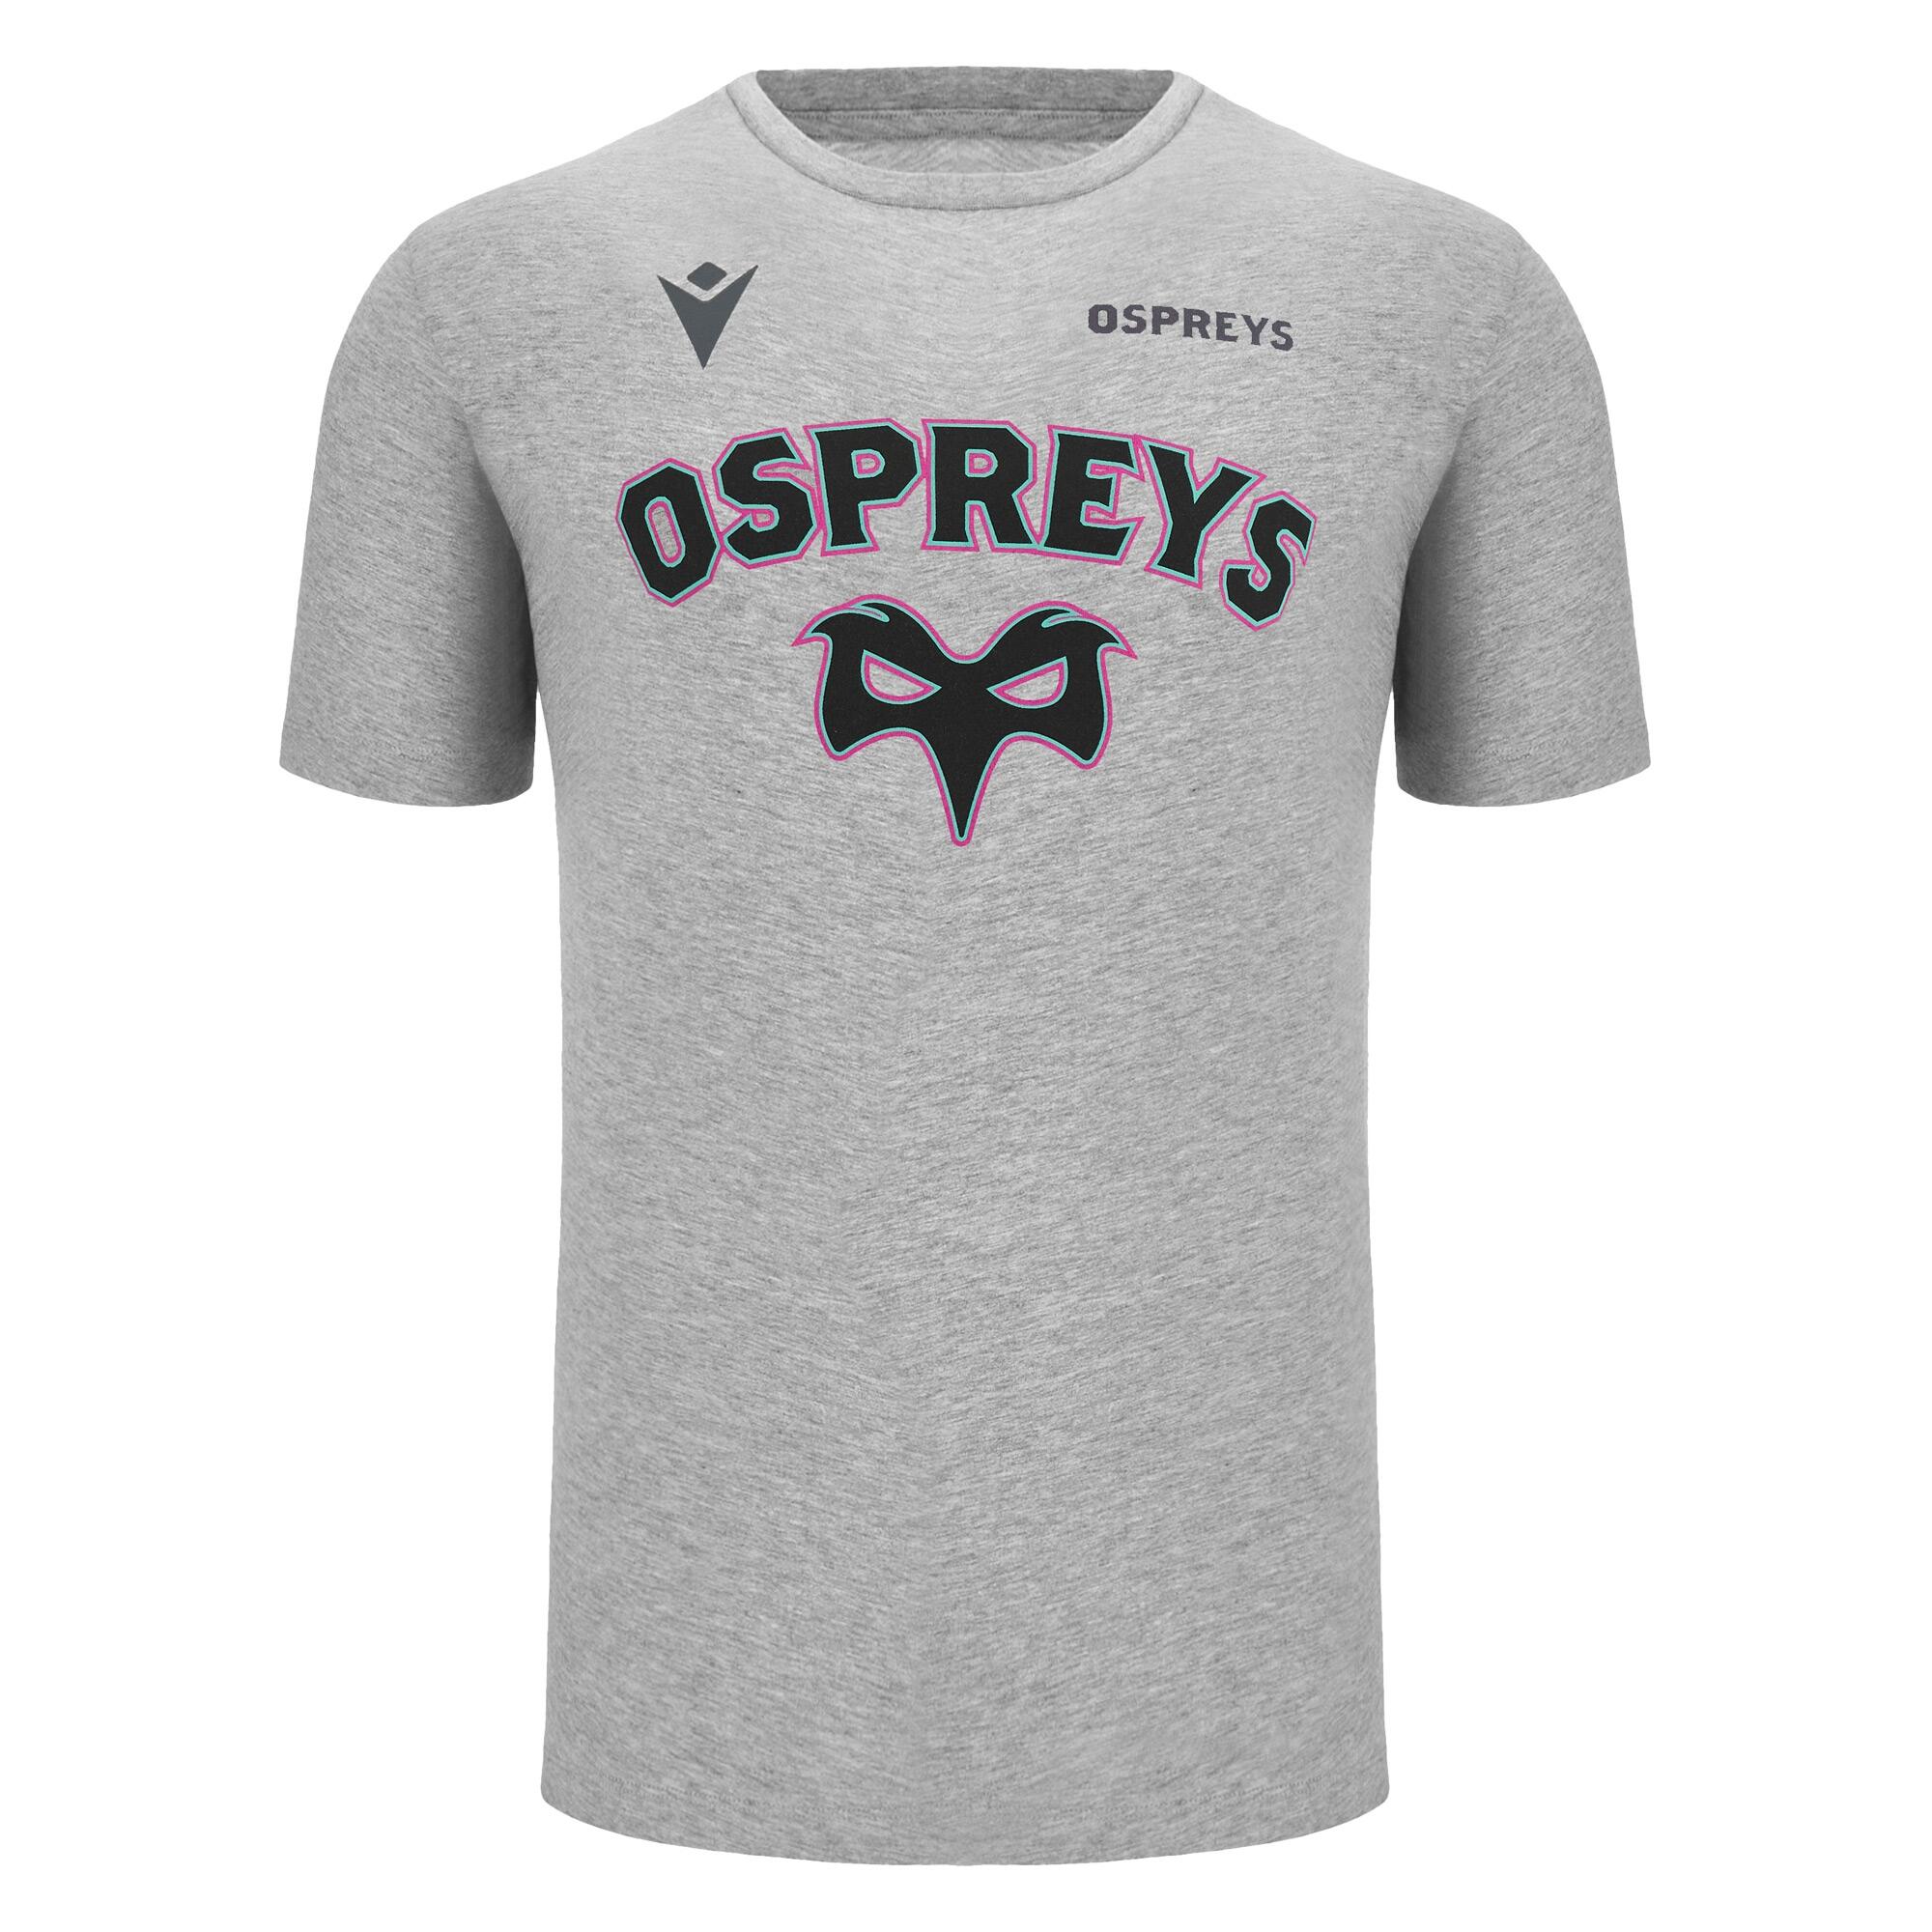 MACRON Macron Ospreys 23/24 Mens Leisure Cotton T Shirt